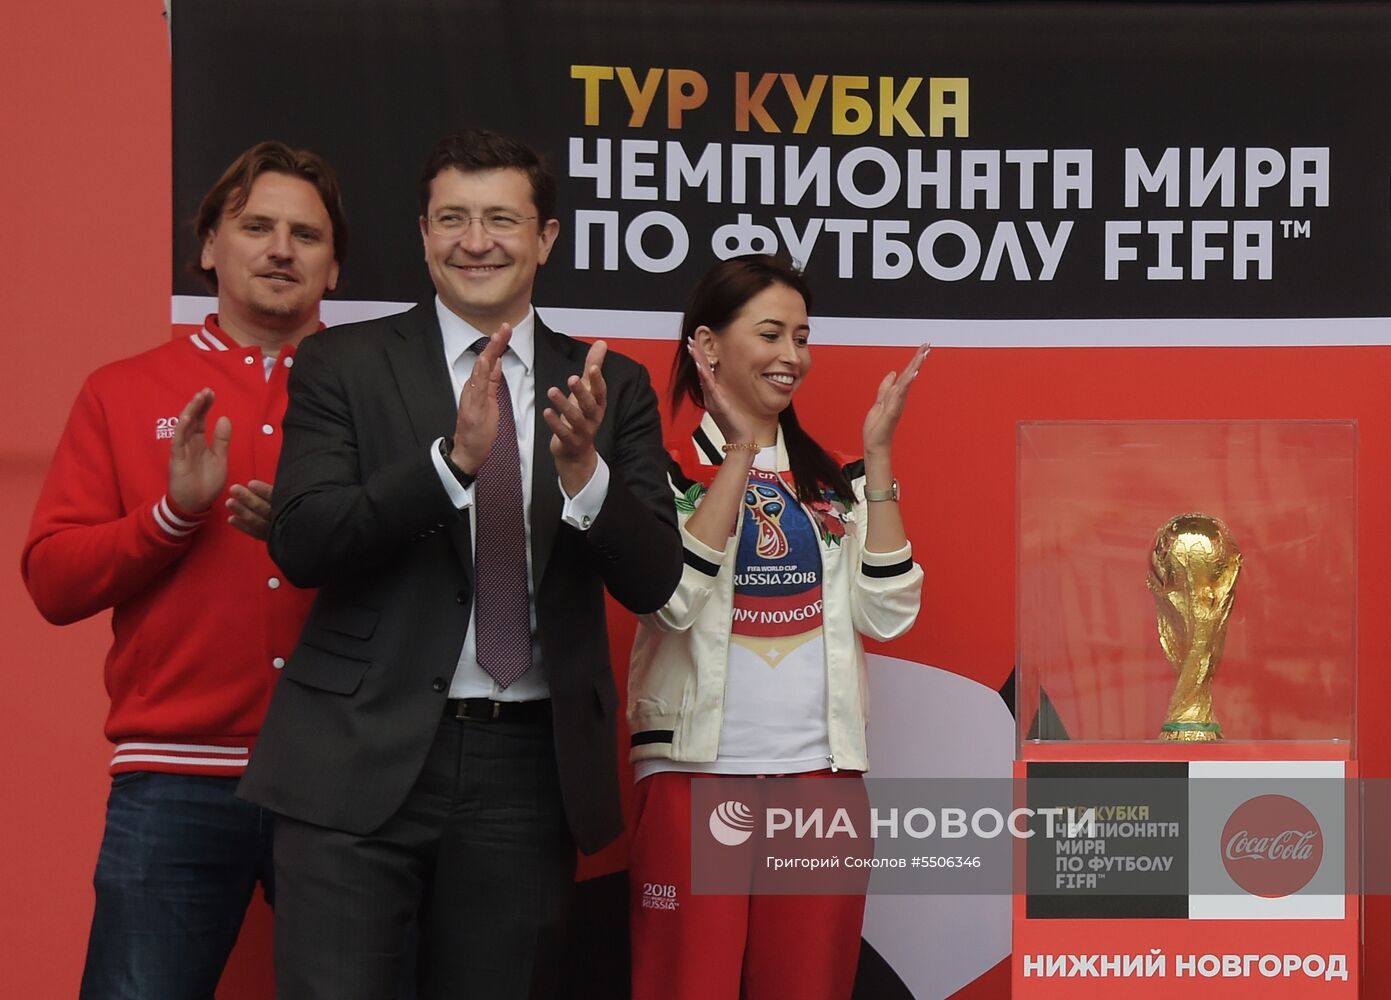 Кубок ЧМ-2018 по футболу представили в Нижнем Новгороде